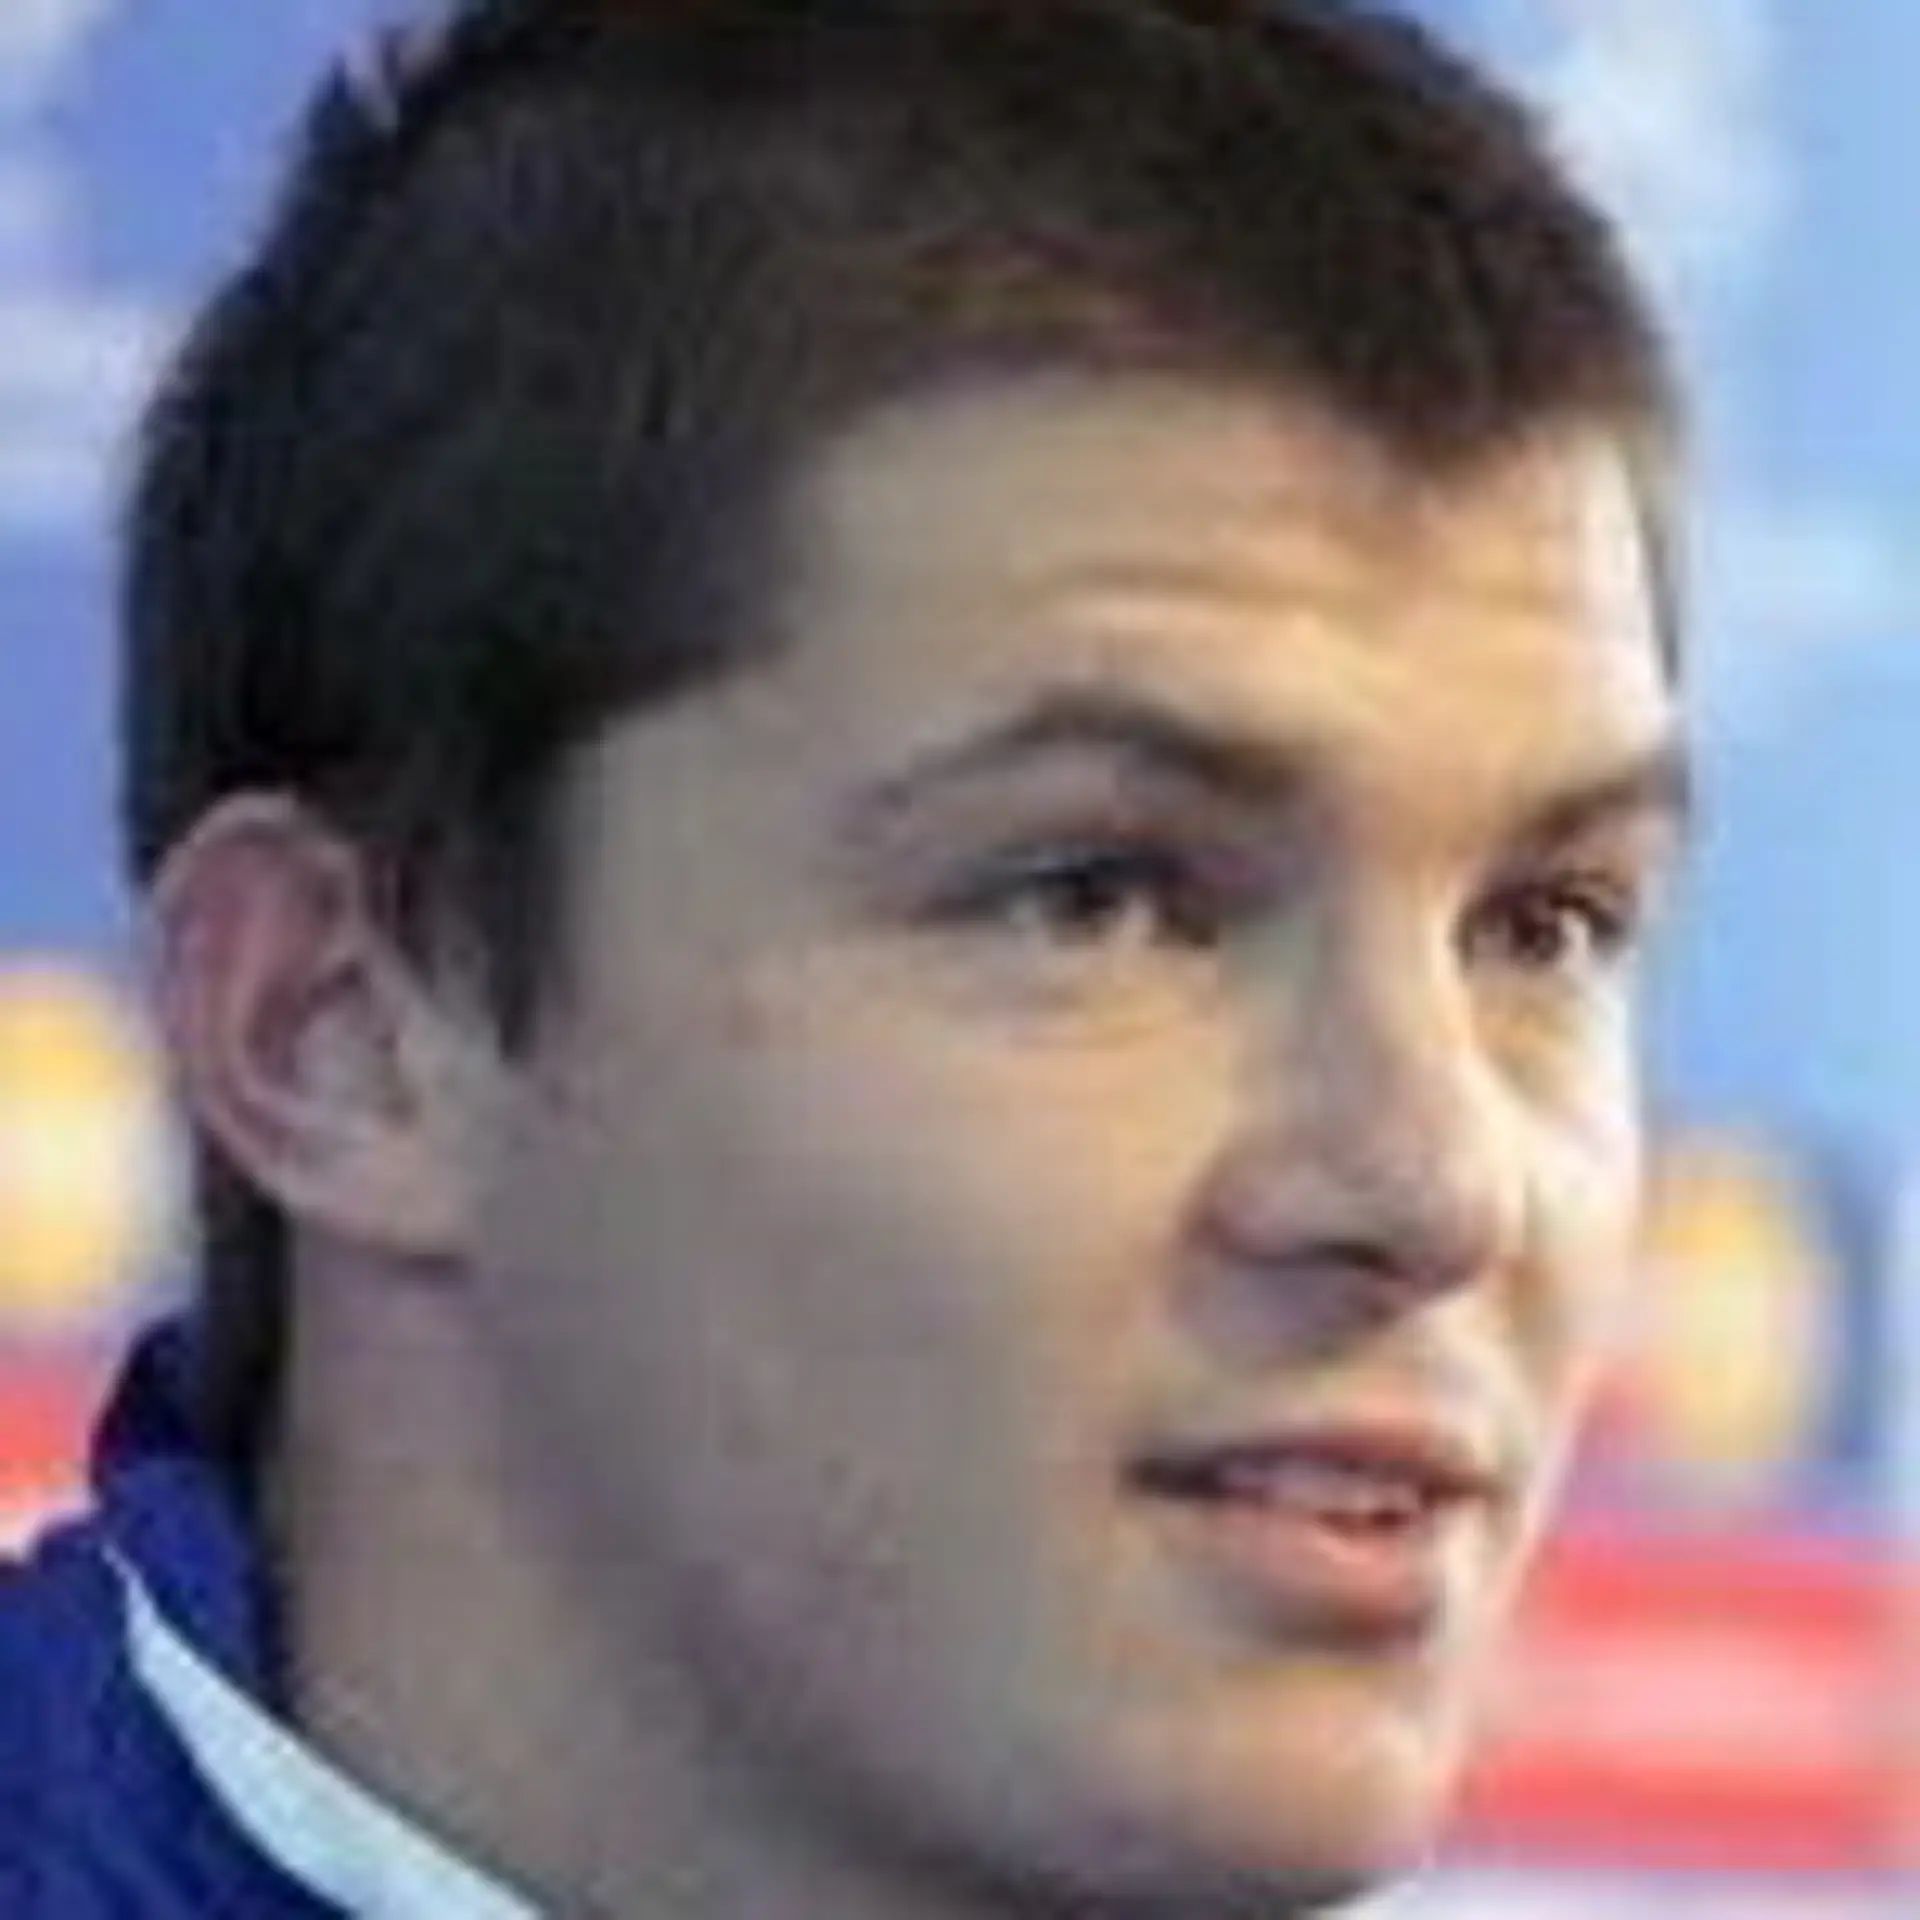 Valeri Domovchiyski